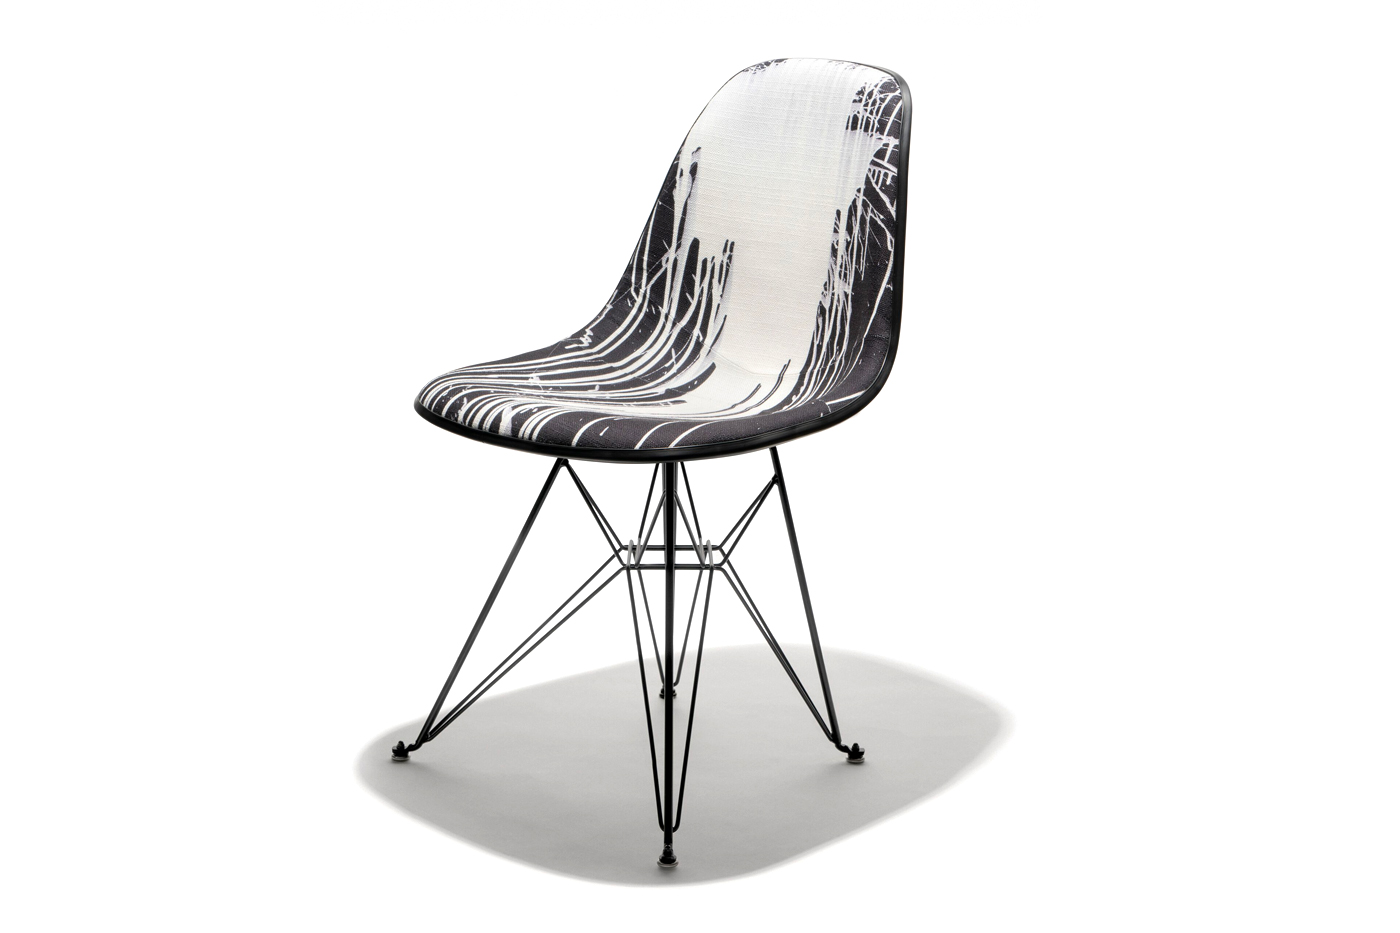 Krink Modernica Fiberglass Shell Chair Case Study Furniture Dripping black white edge trim eiffel base logo new york brooklyn upholstered metal tonal